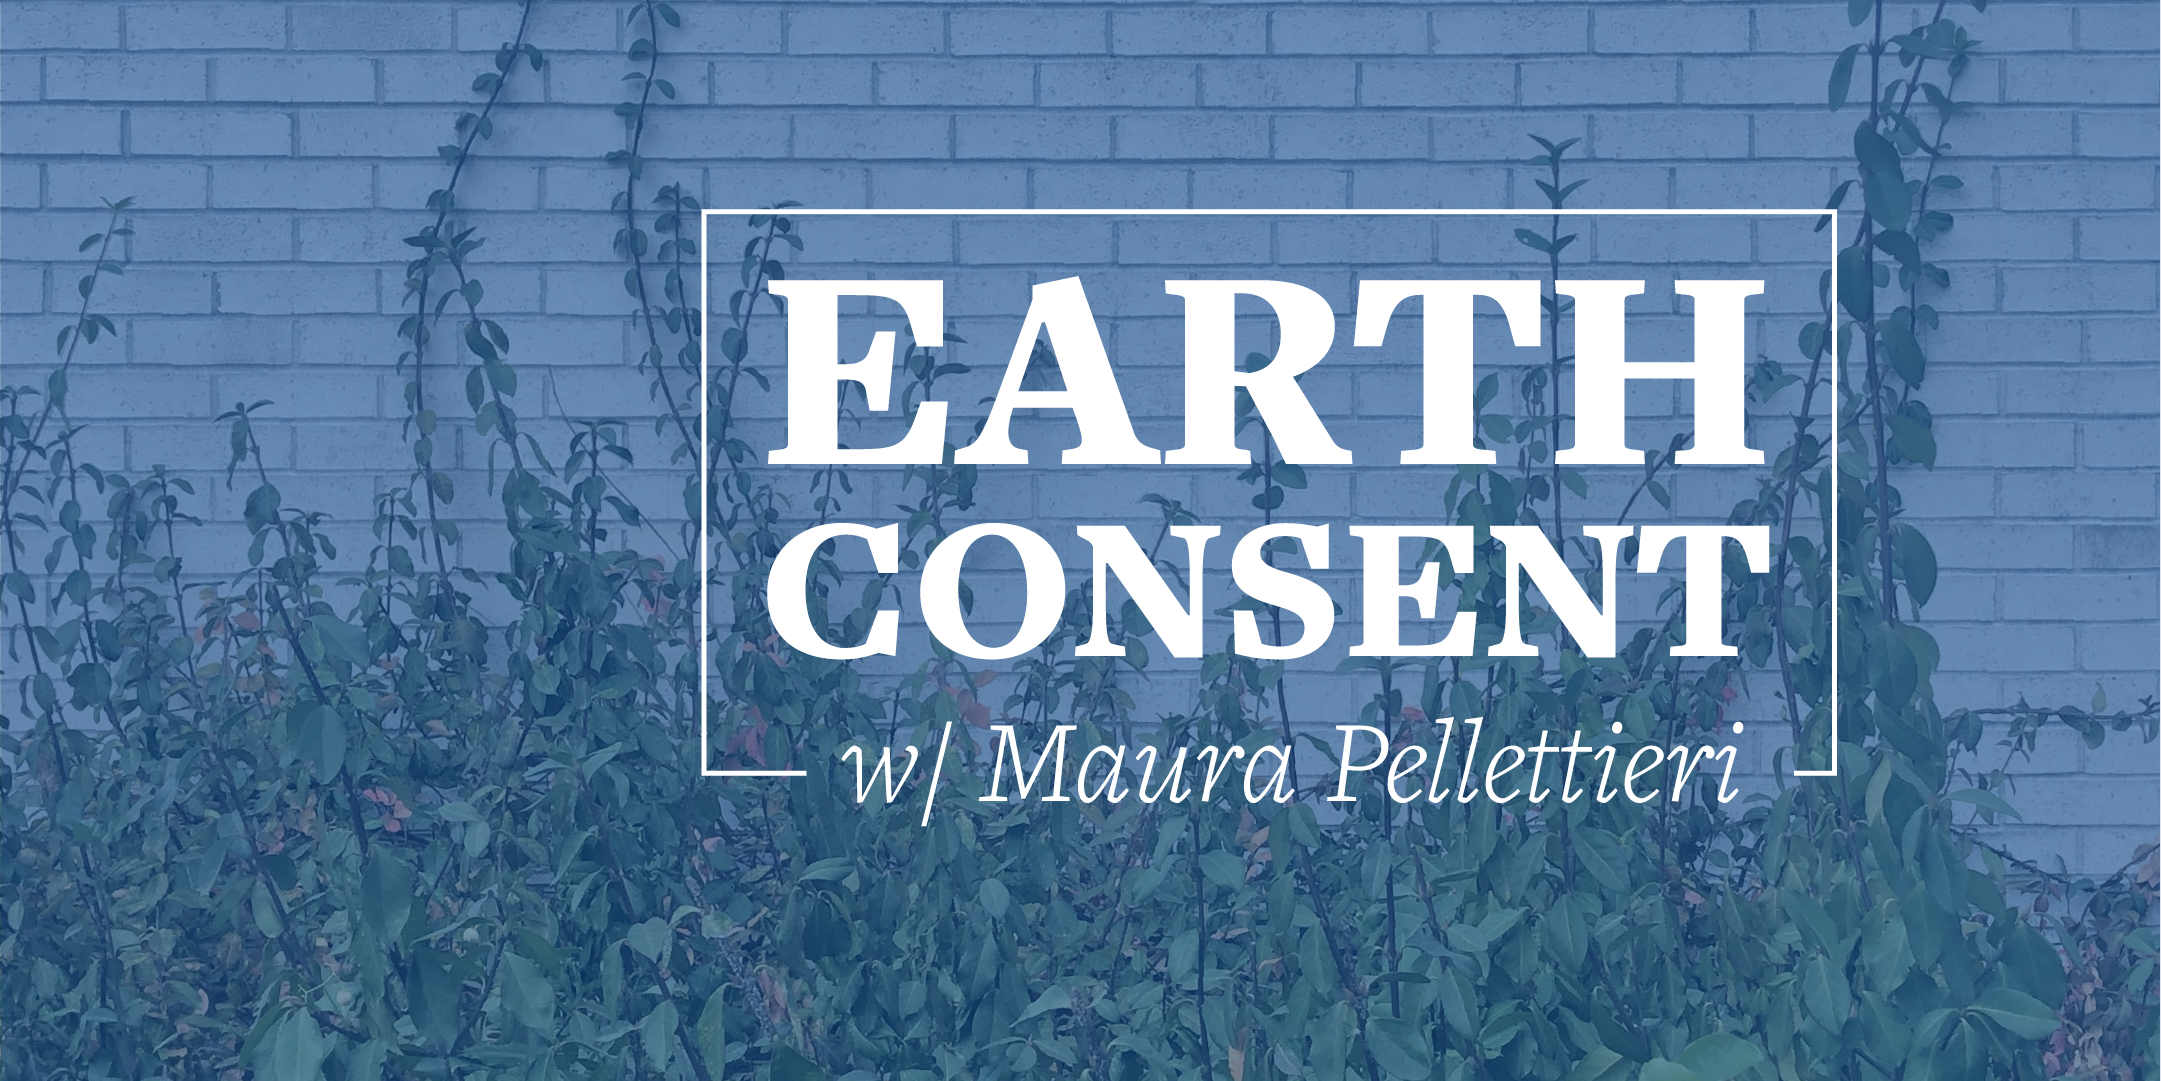 Earth Consent